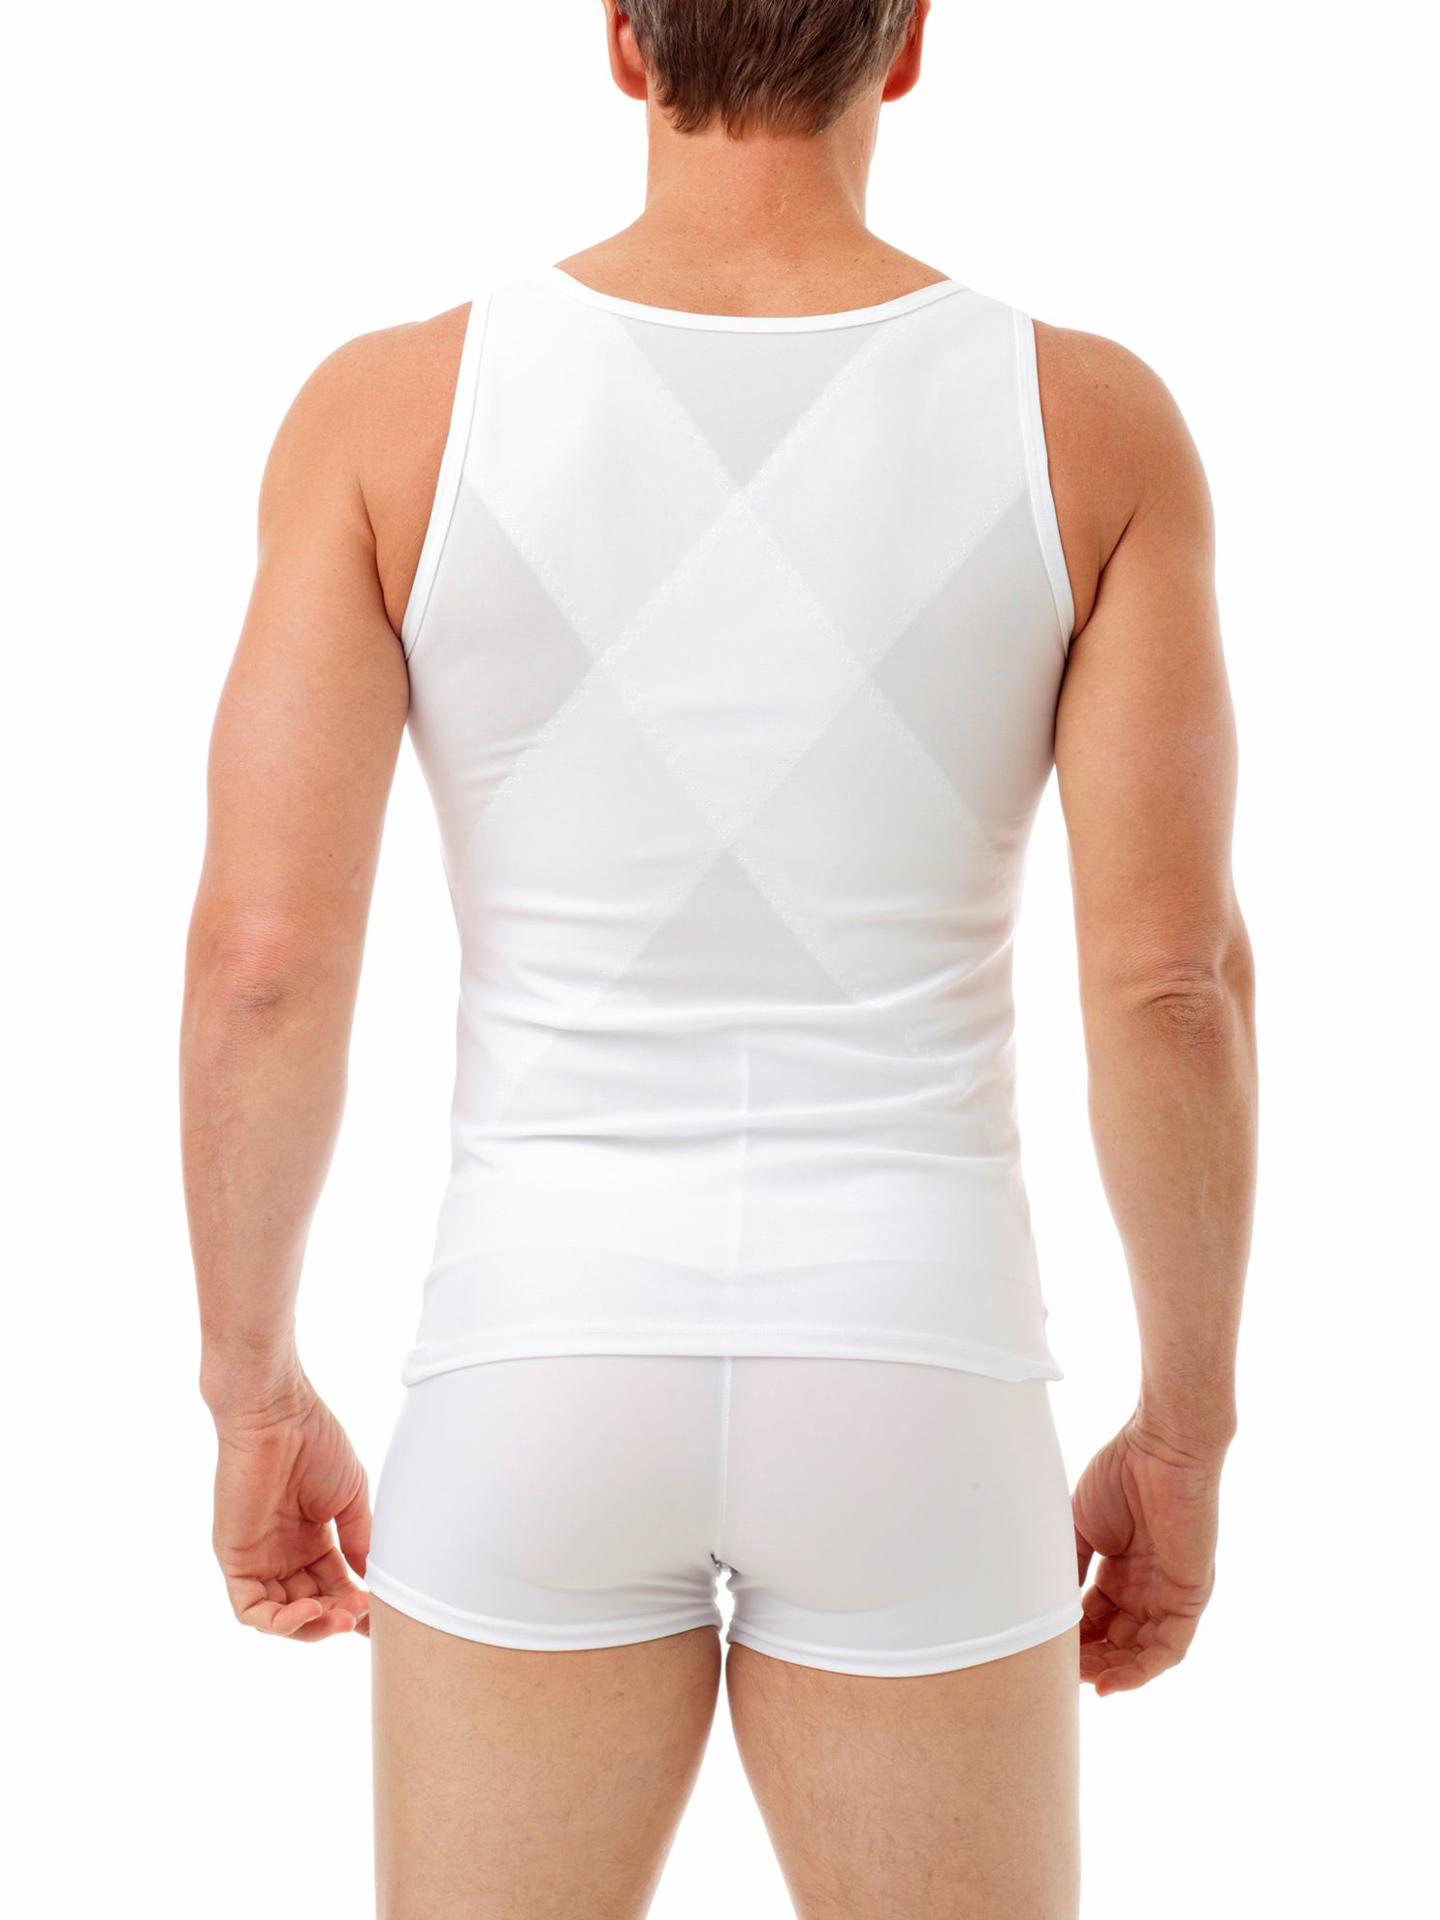 Underworks Mens Posture Corrector Compression Shirt - White - S